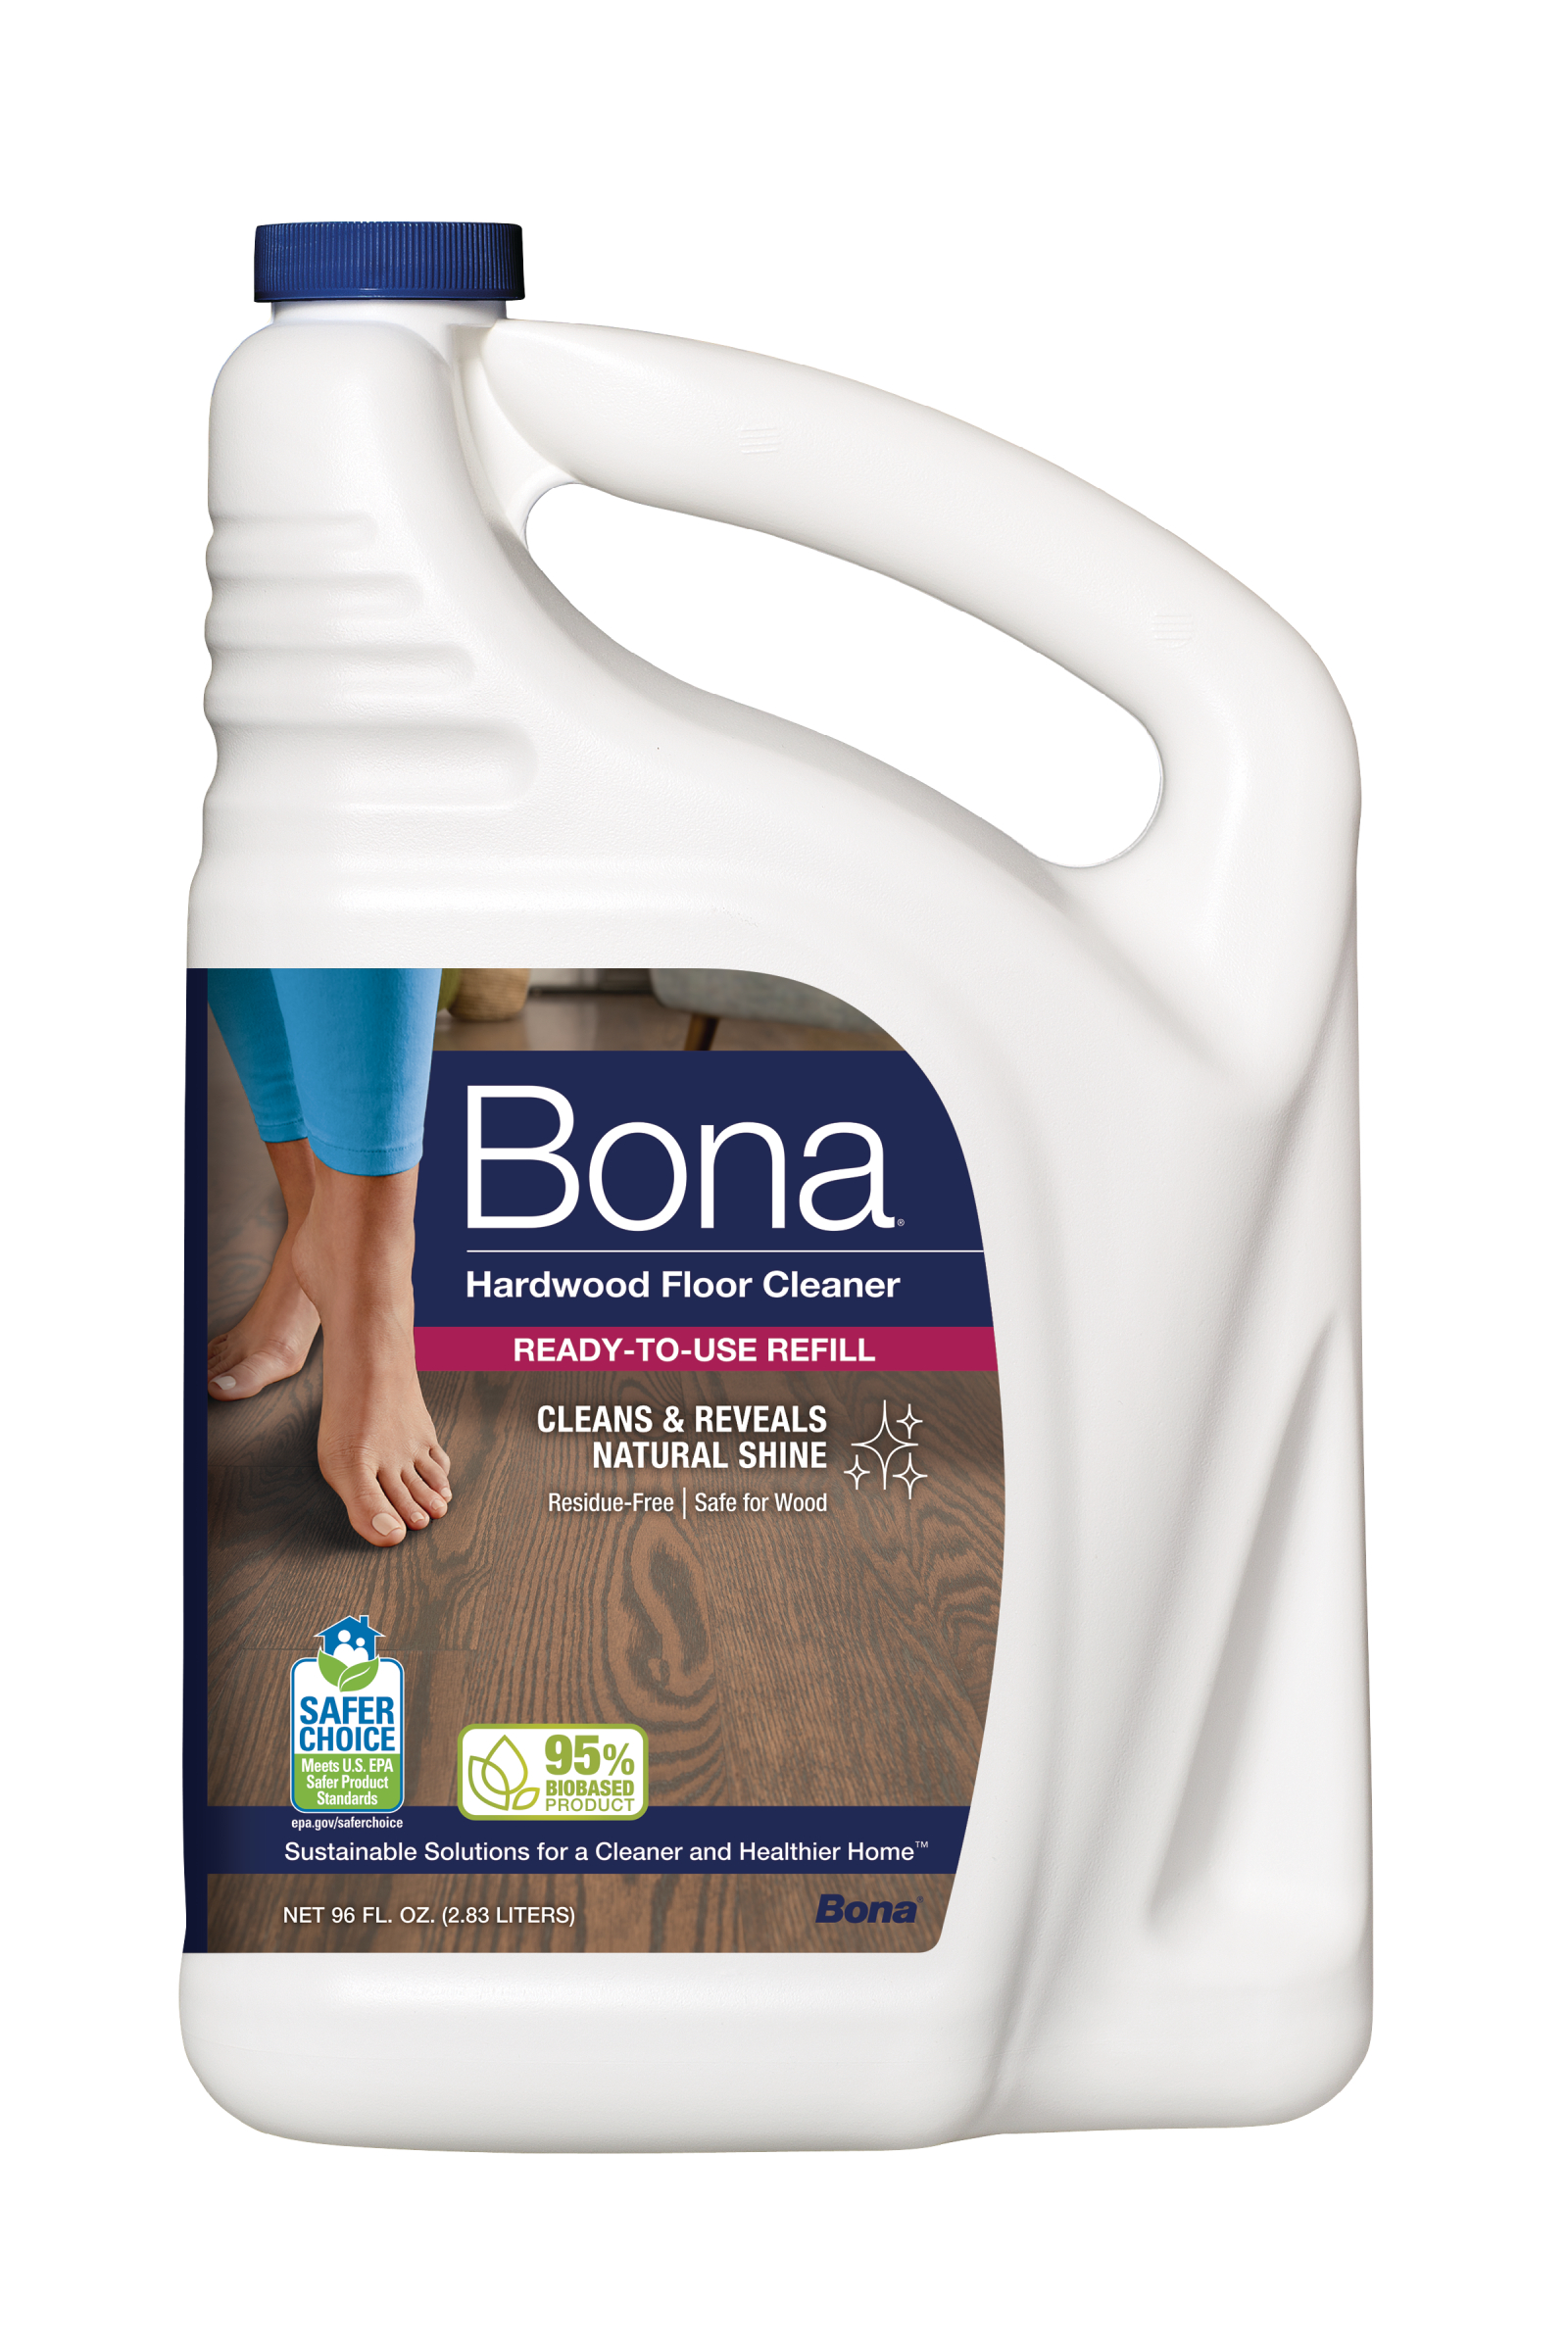 Bona Hardwood Floor Cleaner Refill, 96 fl oz - image 1 of 7